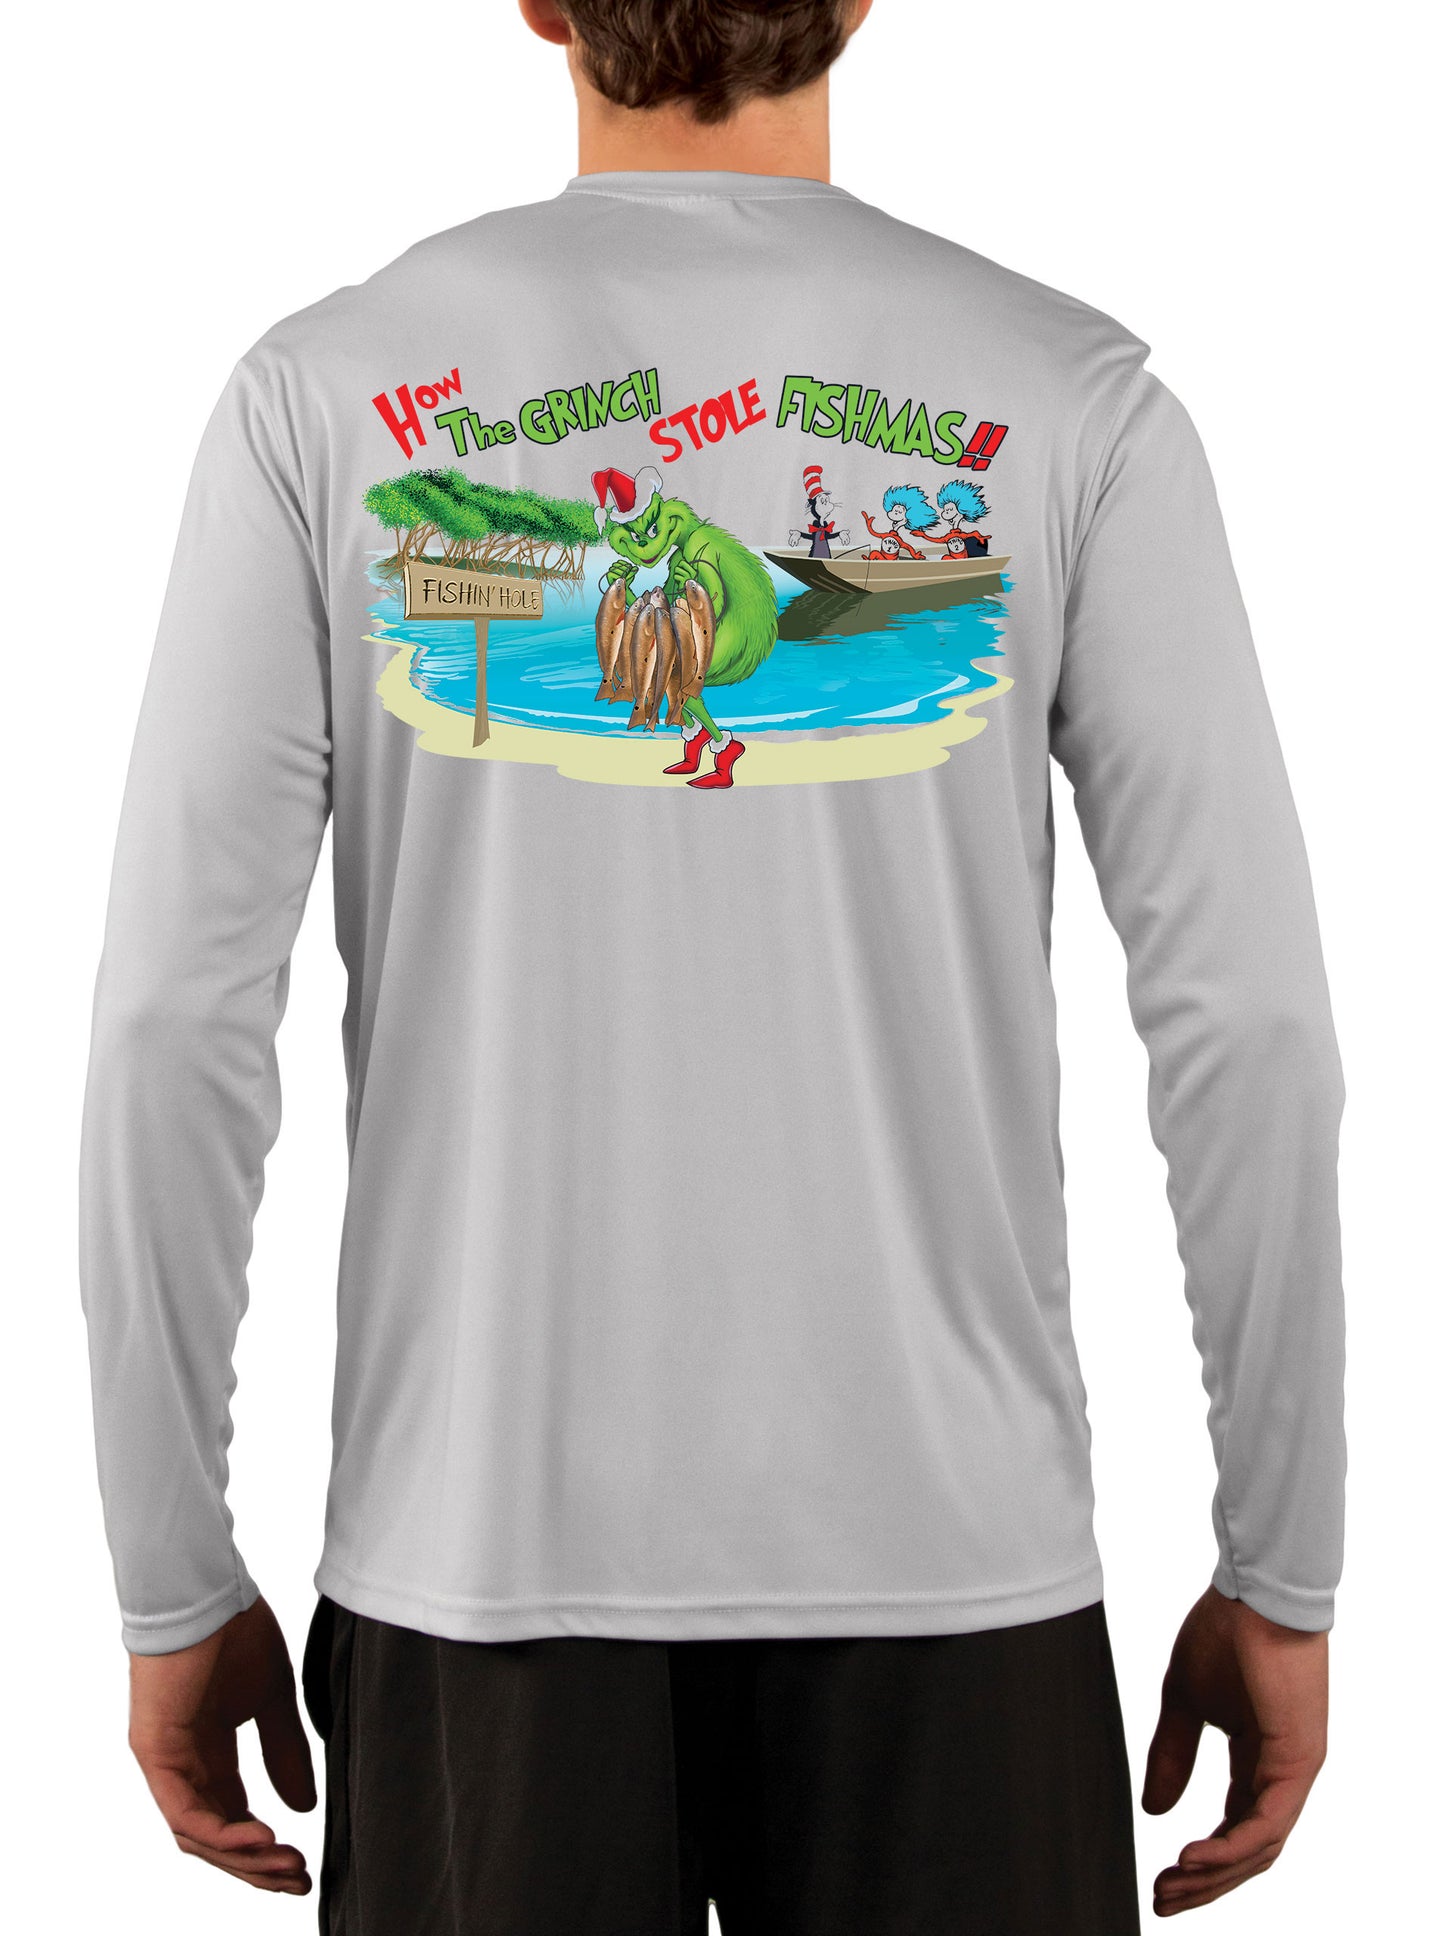 The Grinch Who Stole Christmas Fishmas Fishing Shirts by Skiff Life - Skiff Life